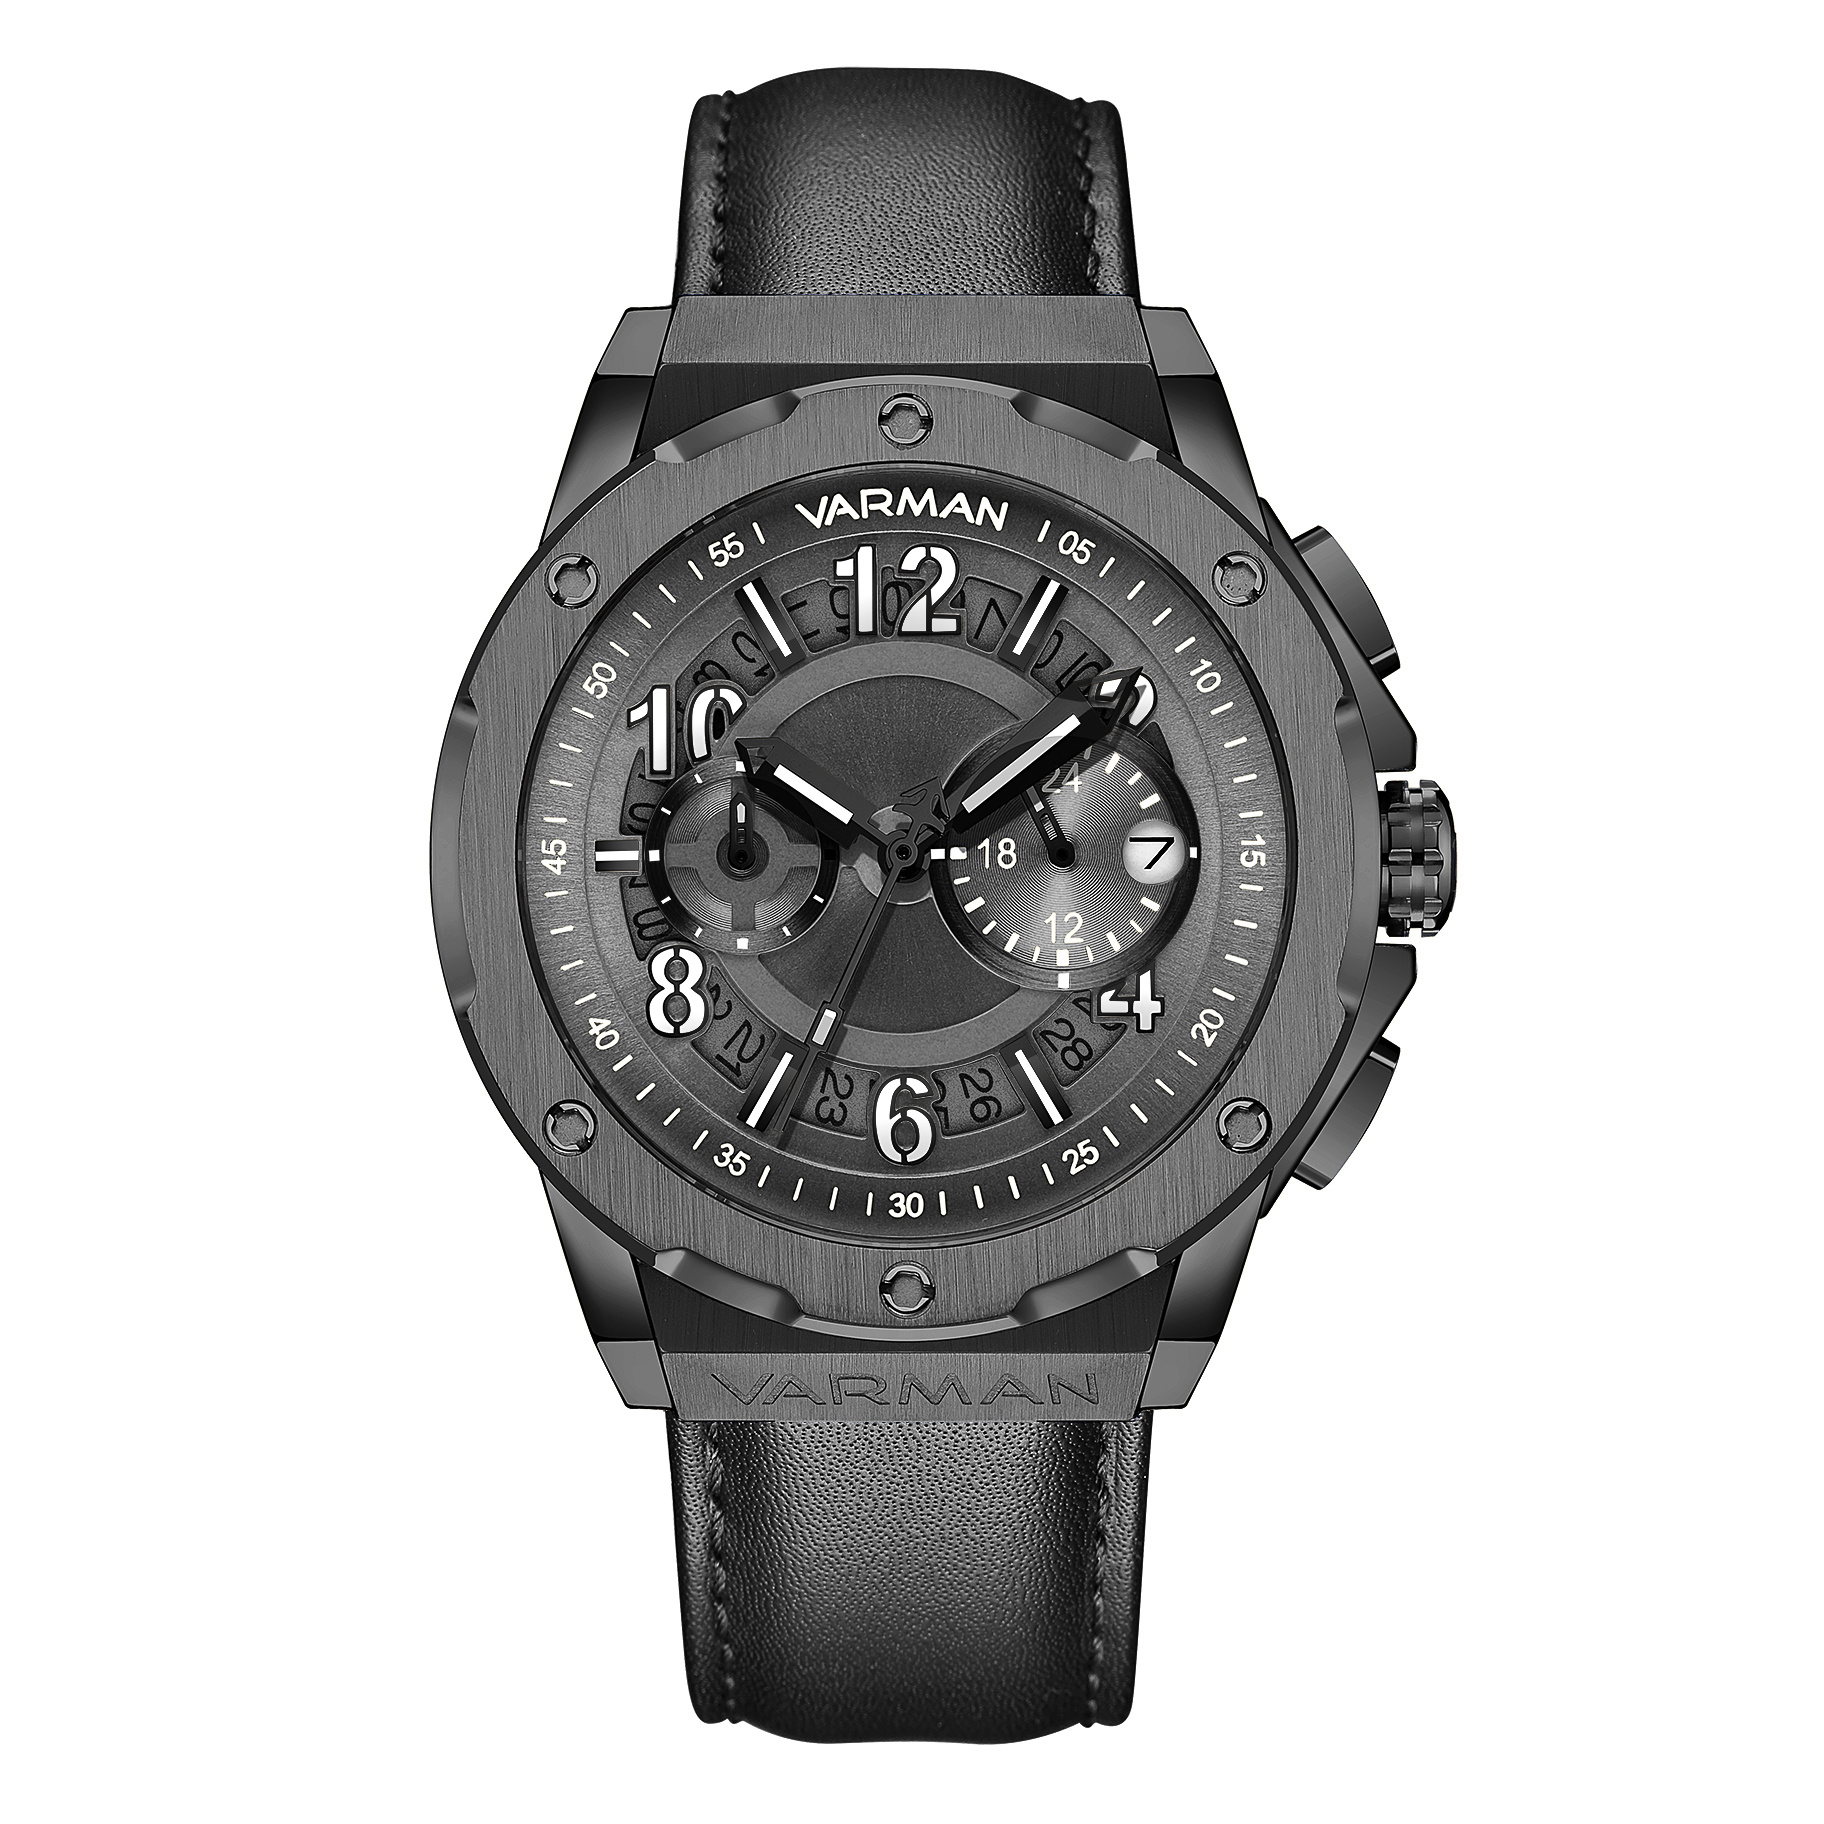 VARMAN The Prestige Watch - Black Leather - VTENH